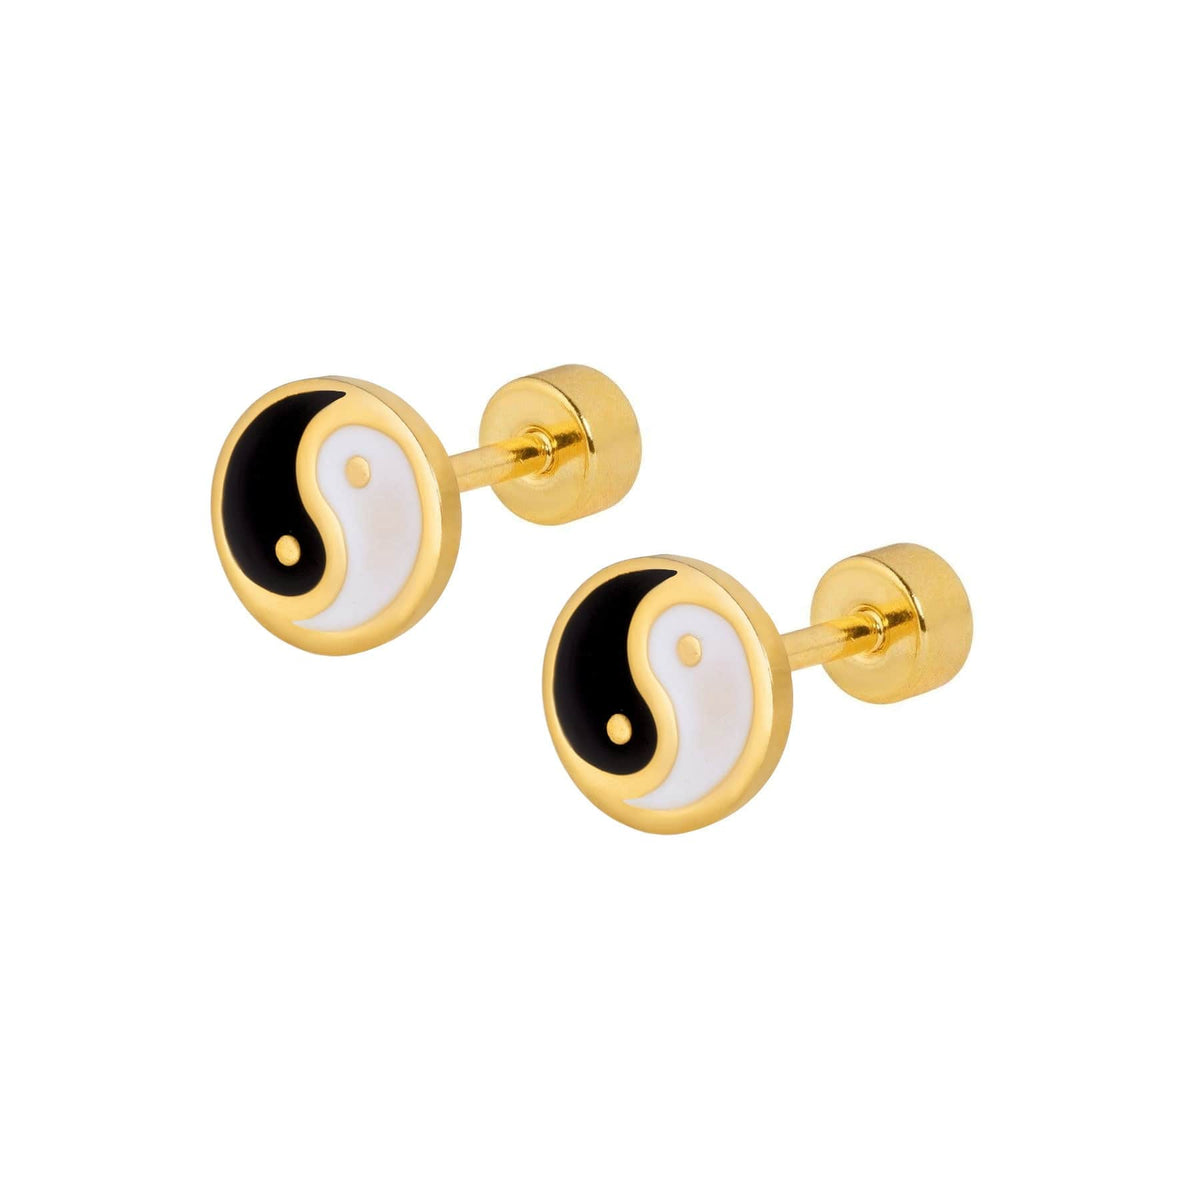 BOHOMOON Stainless Steel Elise Yin Yang Stud Earrings Gold